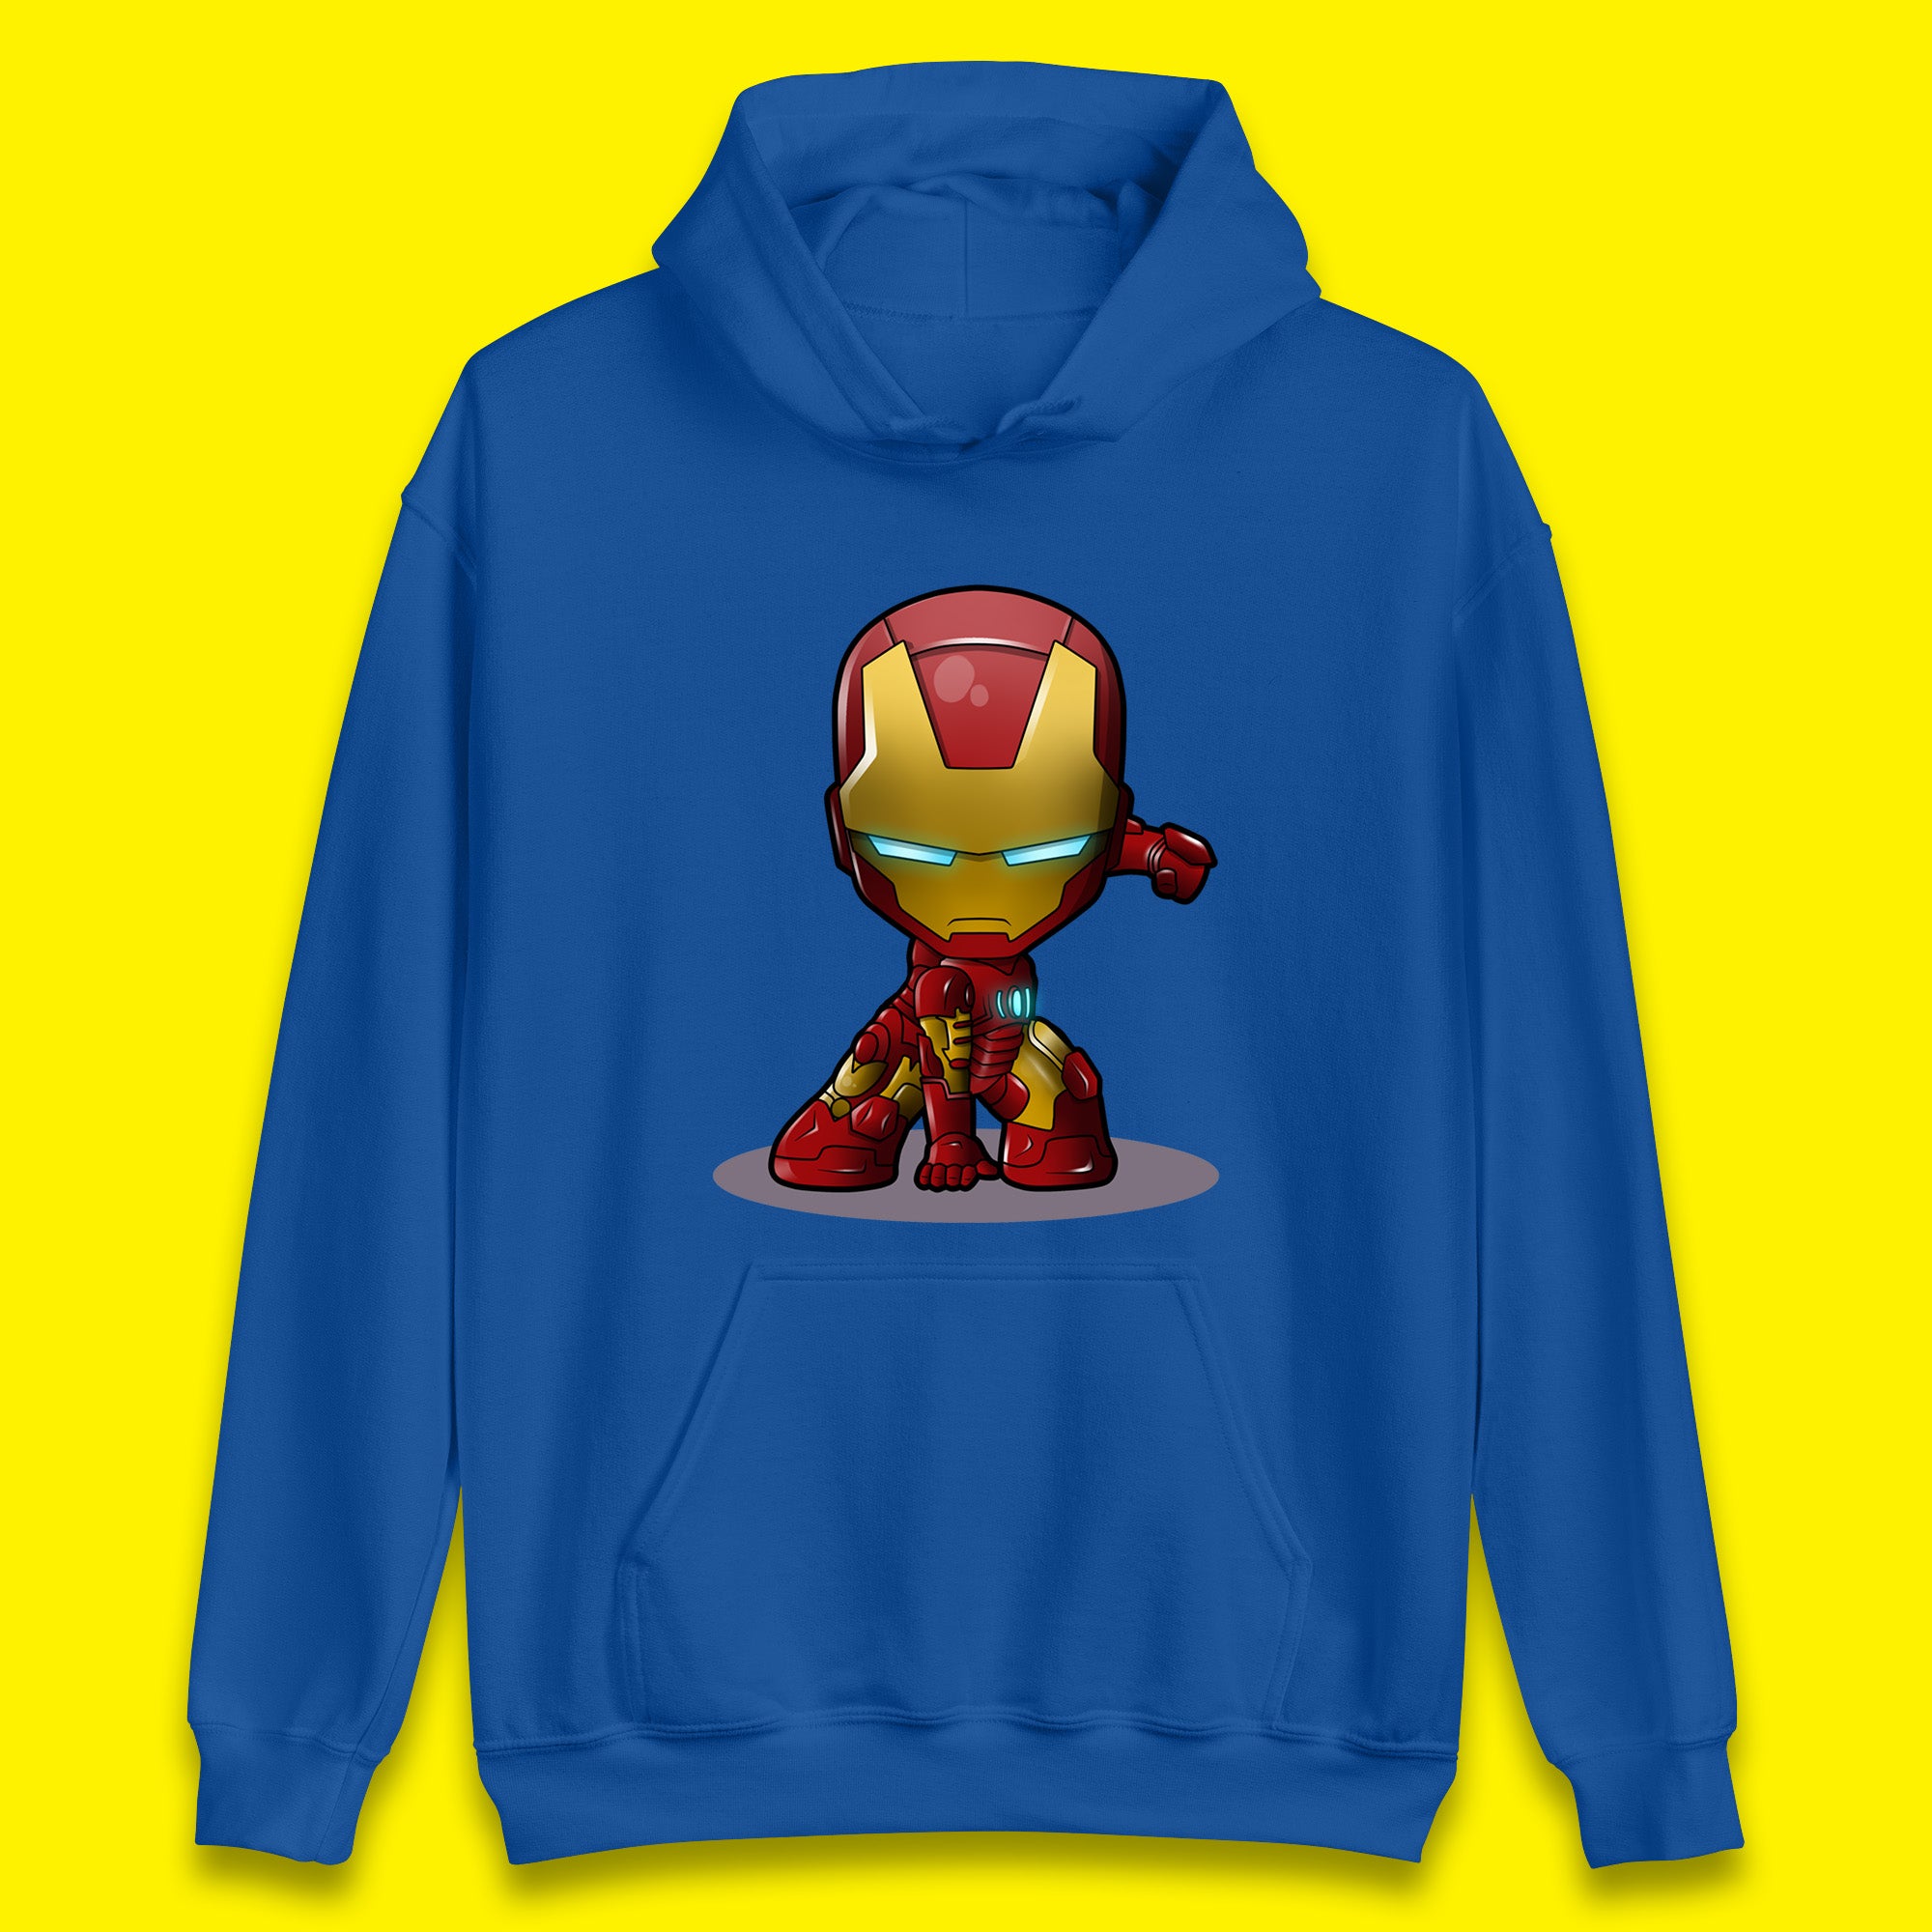 Marvel Avenger Iron Man Movie Character Ironman Costume Superhero Marvel Comics Unisex Hoodie